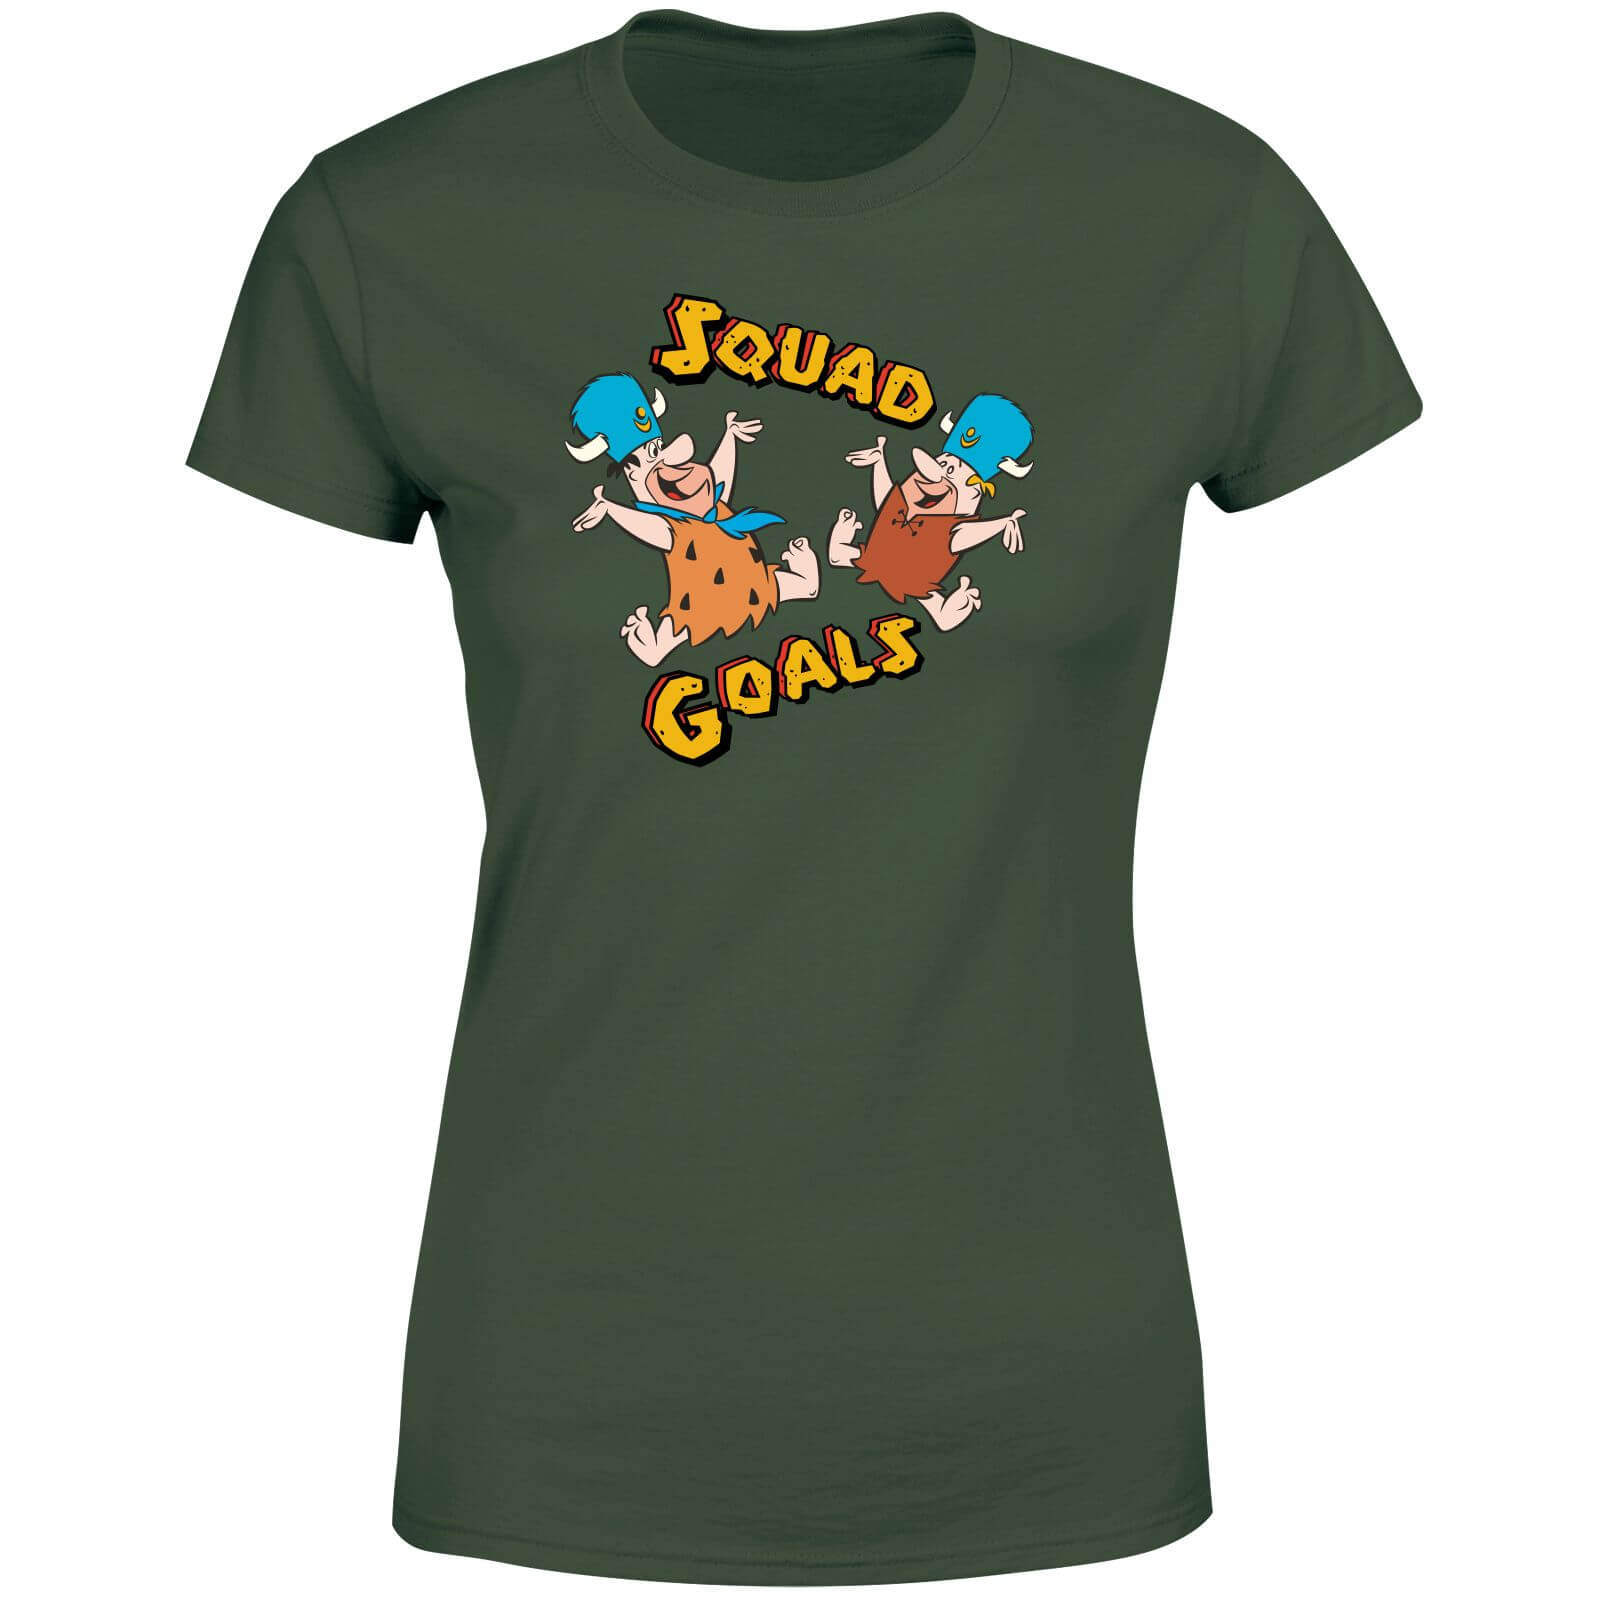 The Flintstones Squad Goals Women's T-Shirt - Forest Green - S - Forest Green